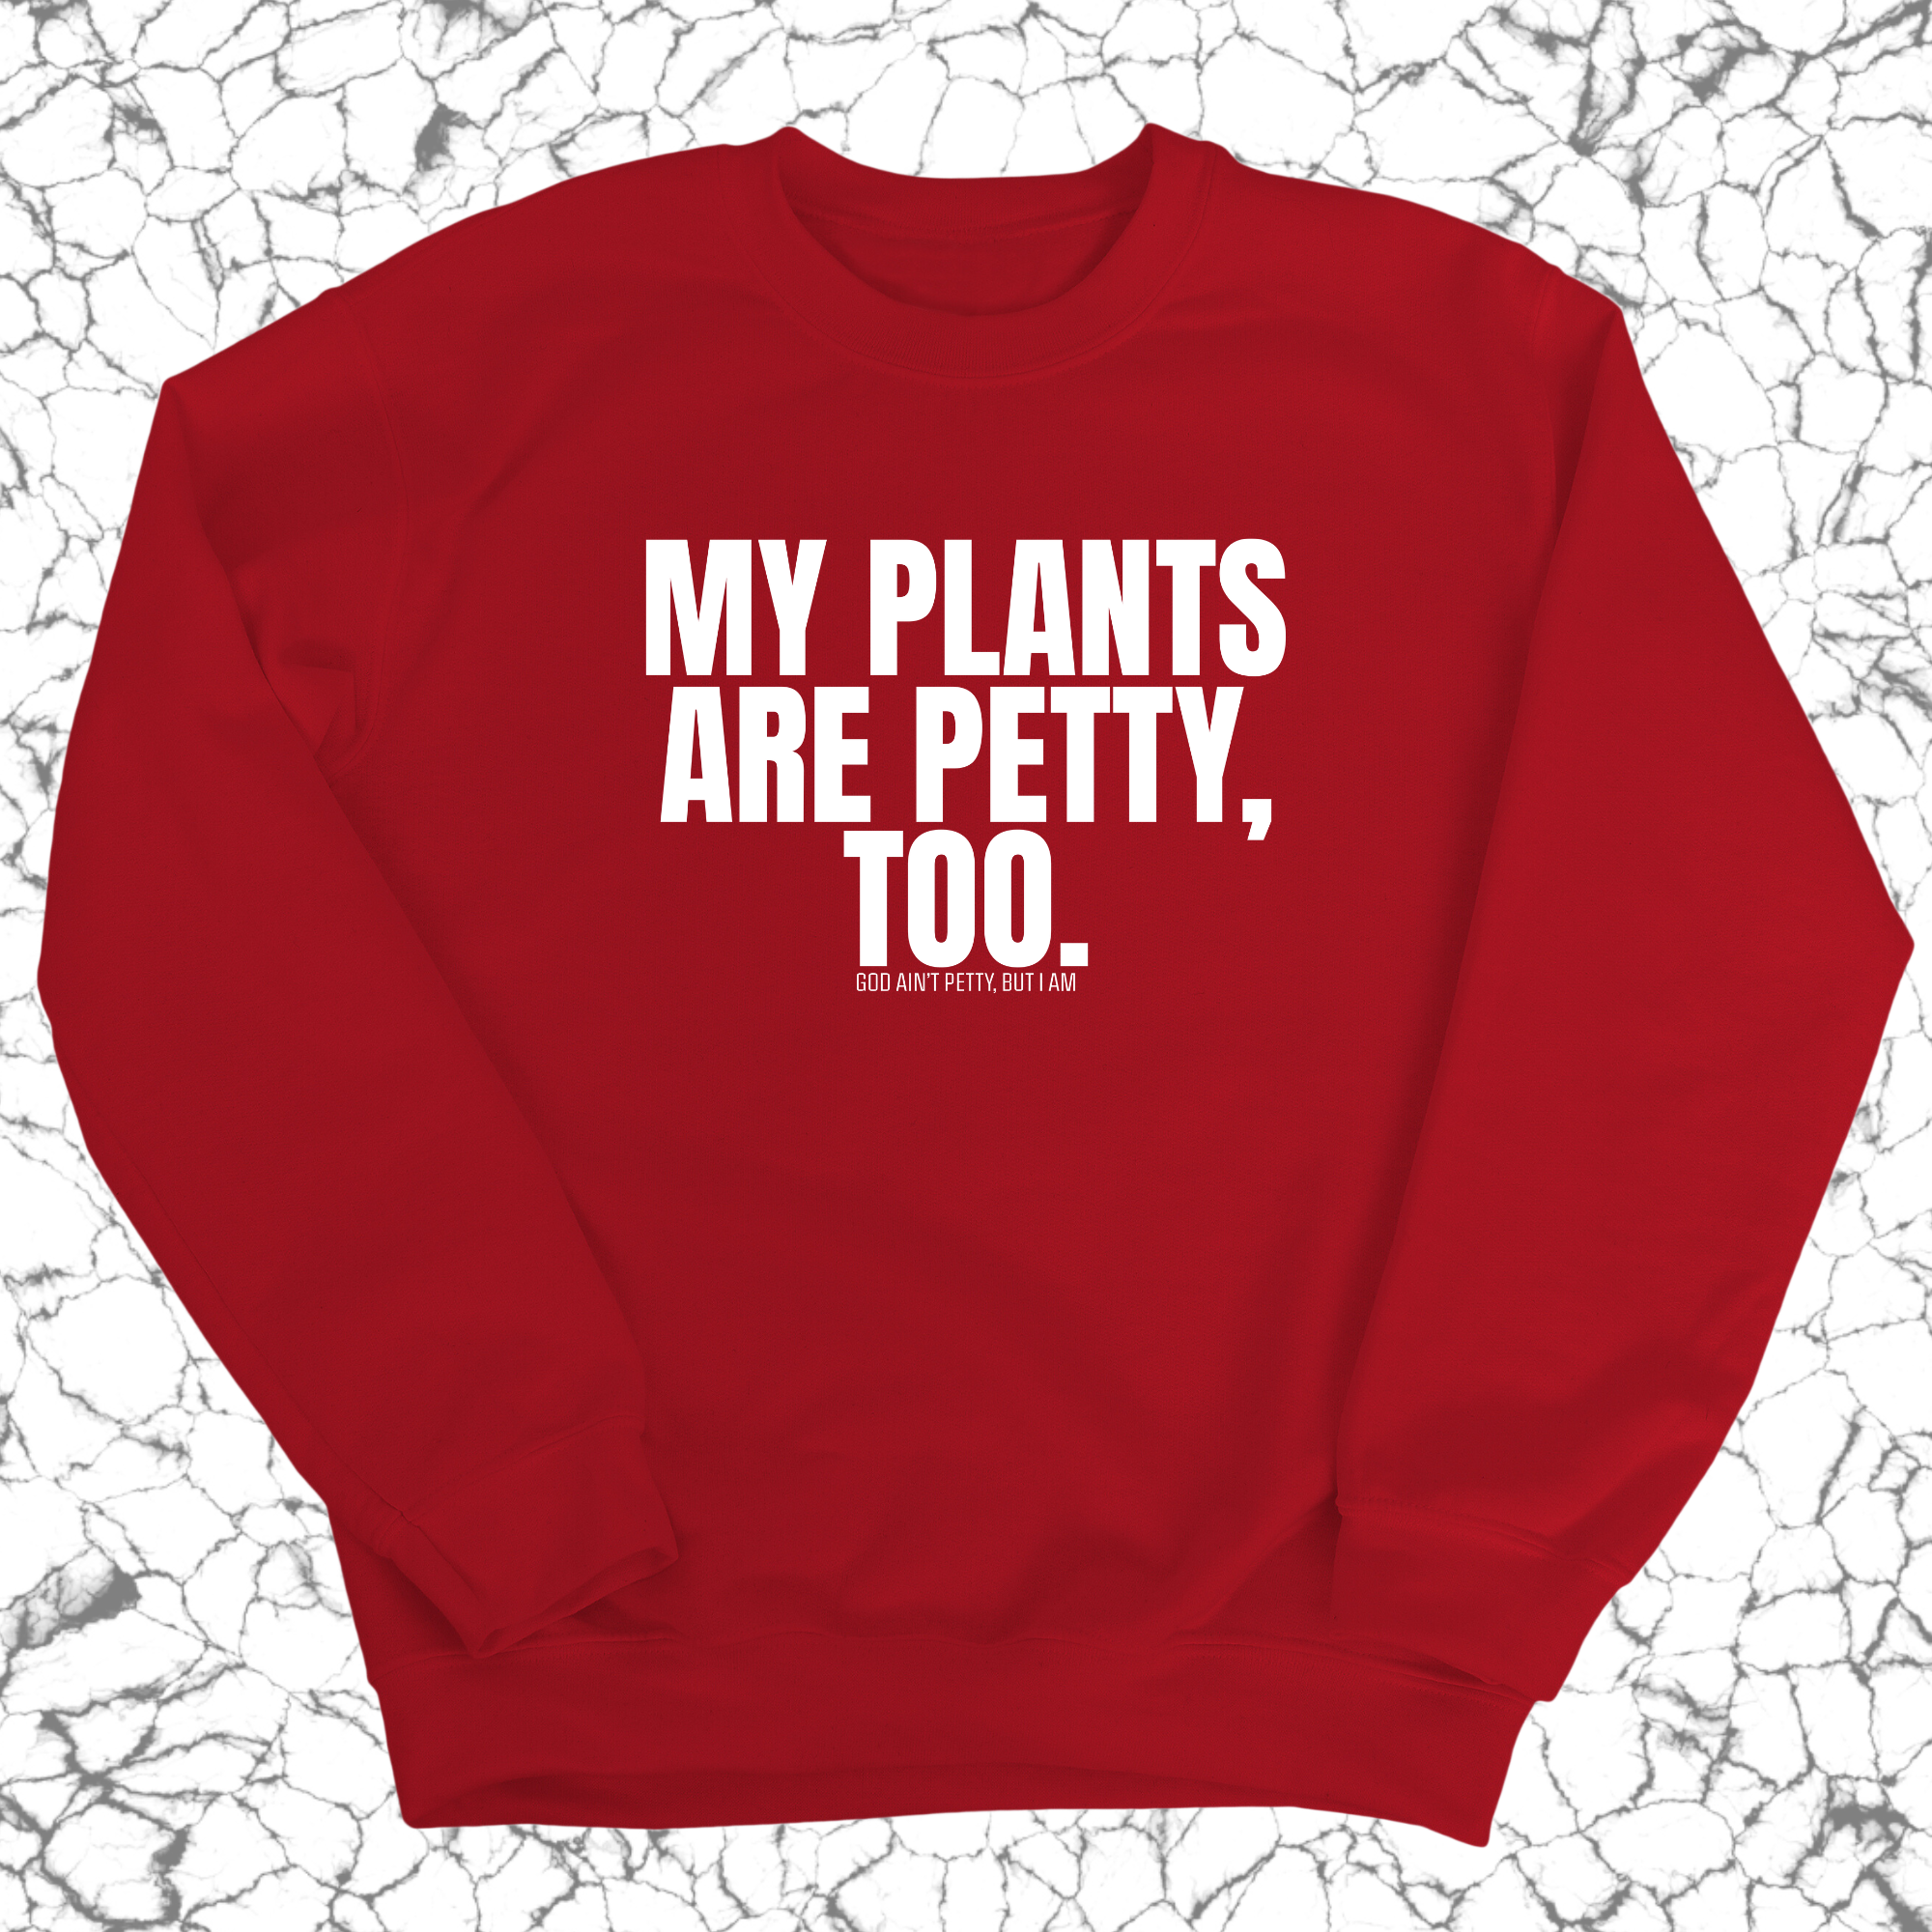 My Plants are Petty too Unisex Sweatshirt-Sweatshirt-The Original God Ain't Petty But I Am